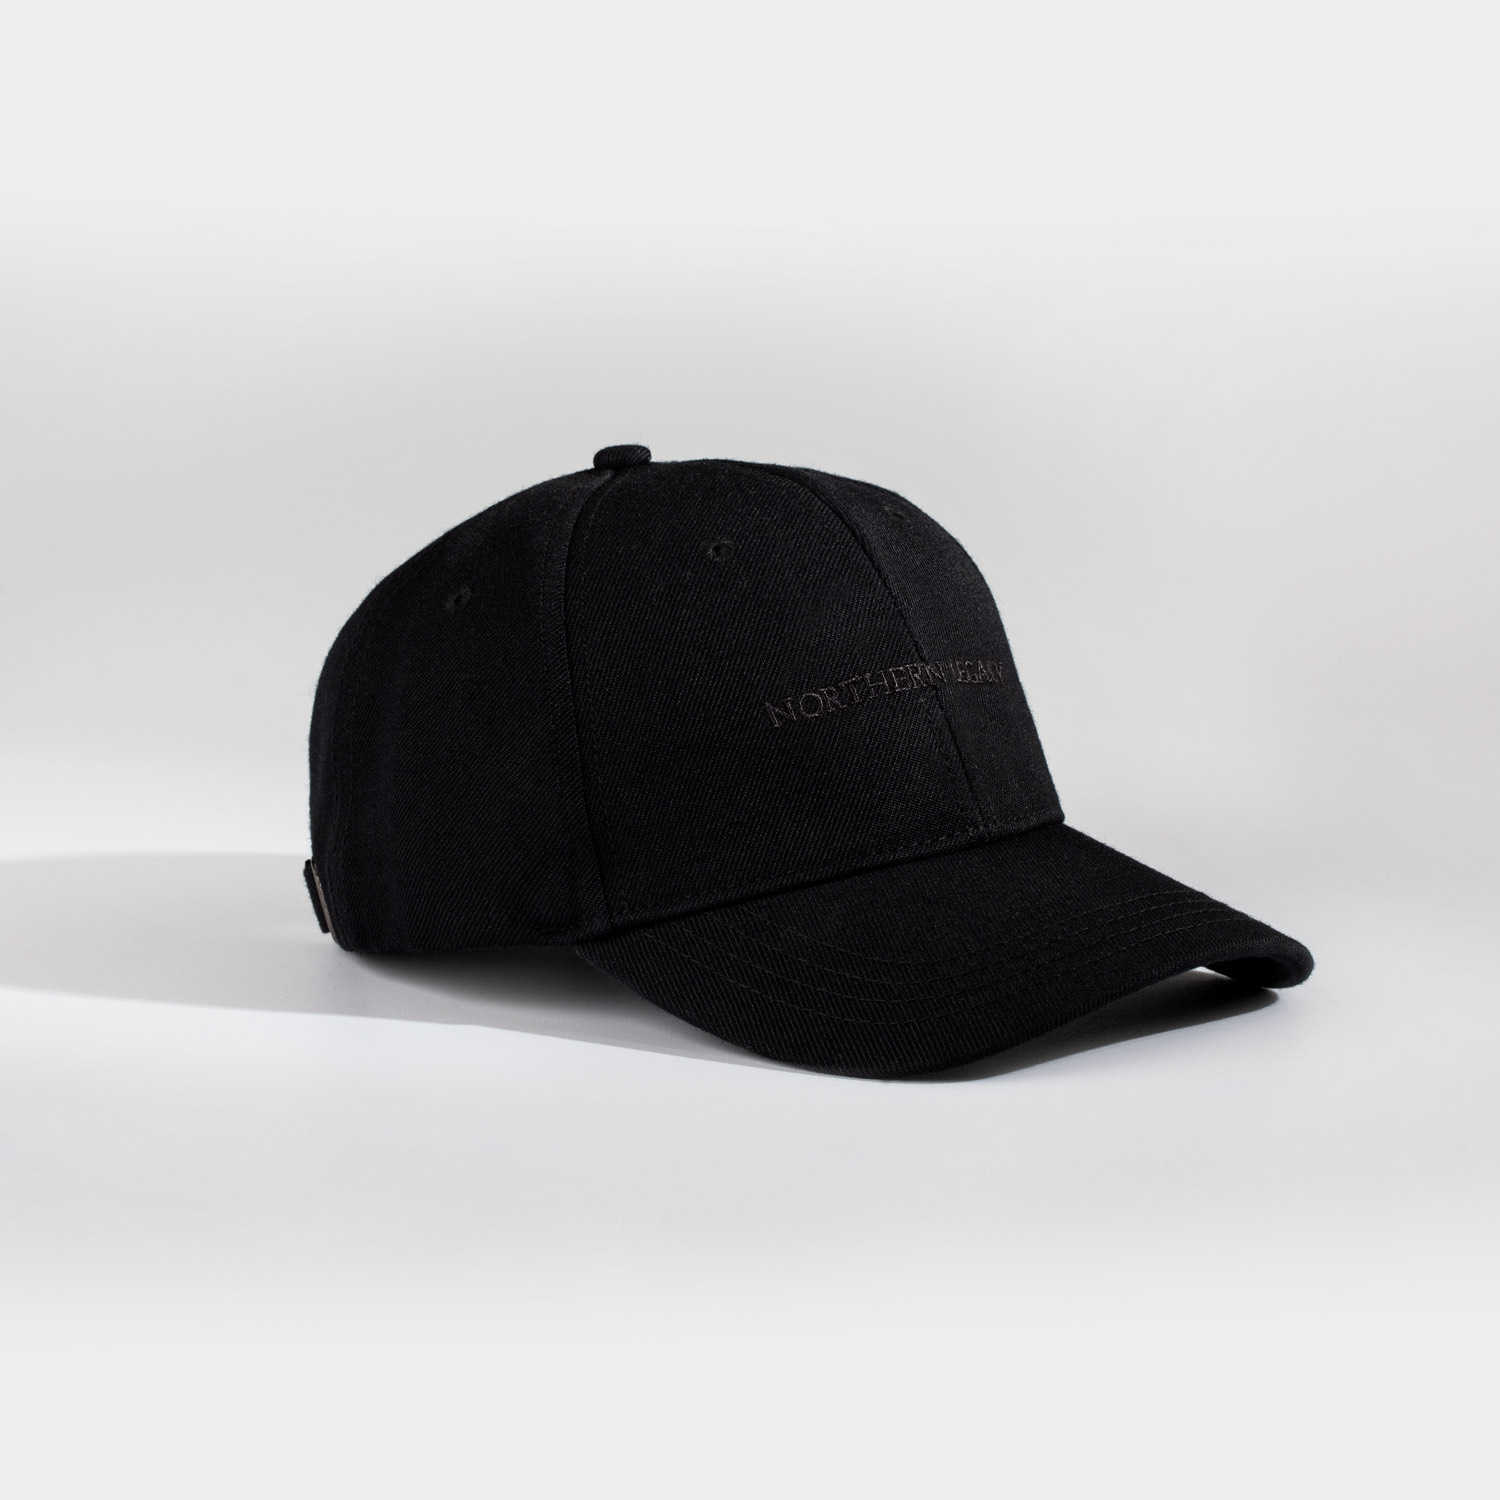 NL Signature Dad cap - Black/black - Caps - Northern Legacy